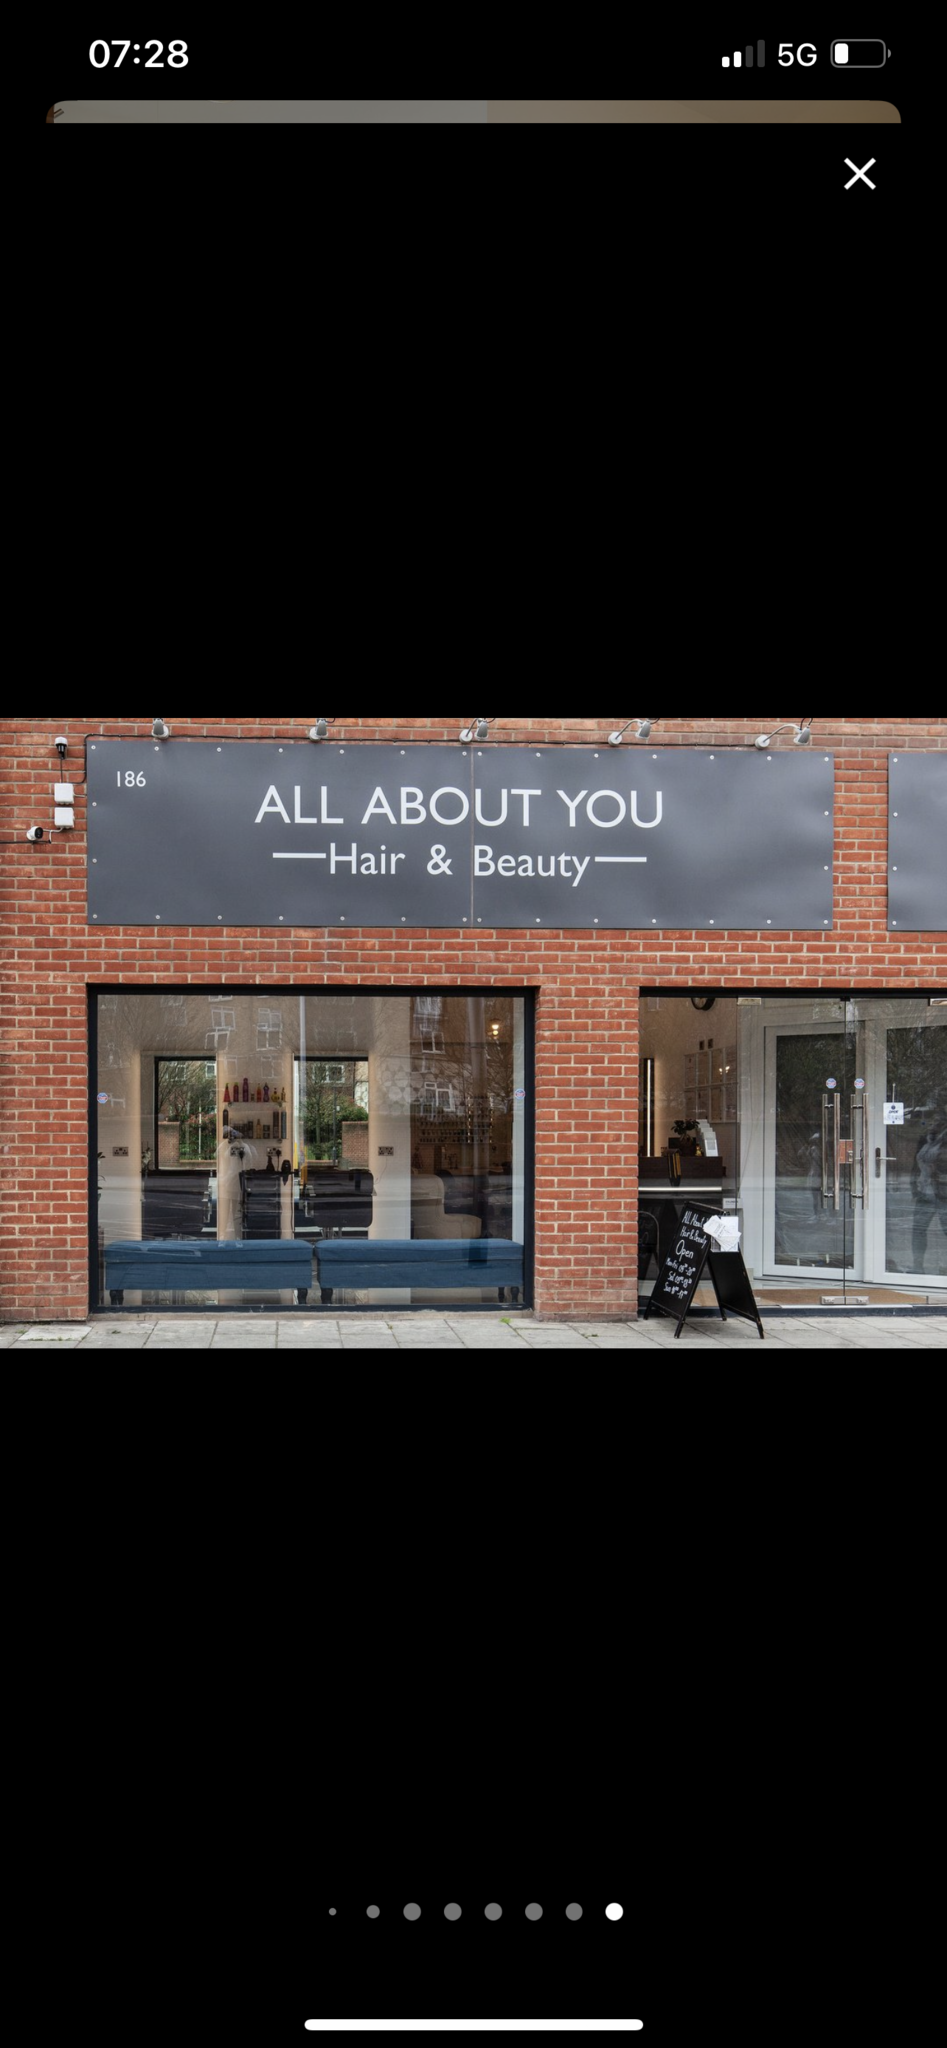 All About You Hair and Beauty Salon Ltd - London, England - Nextdoor